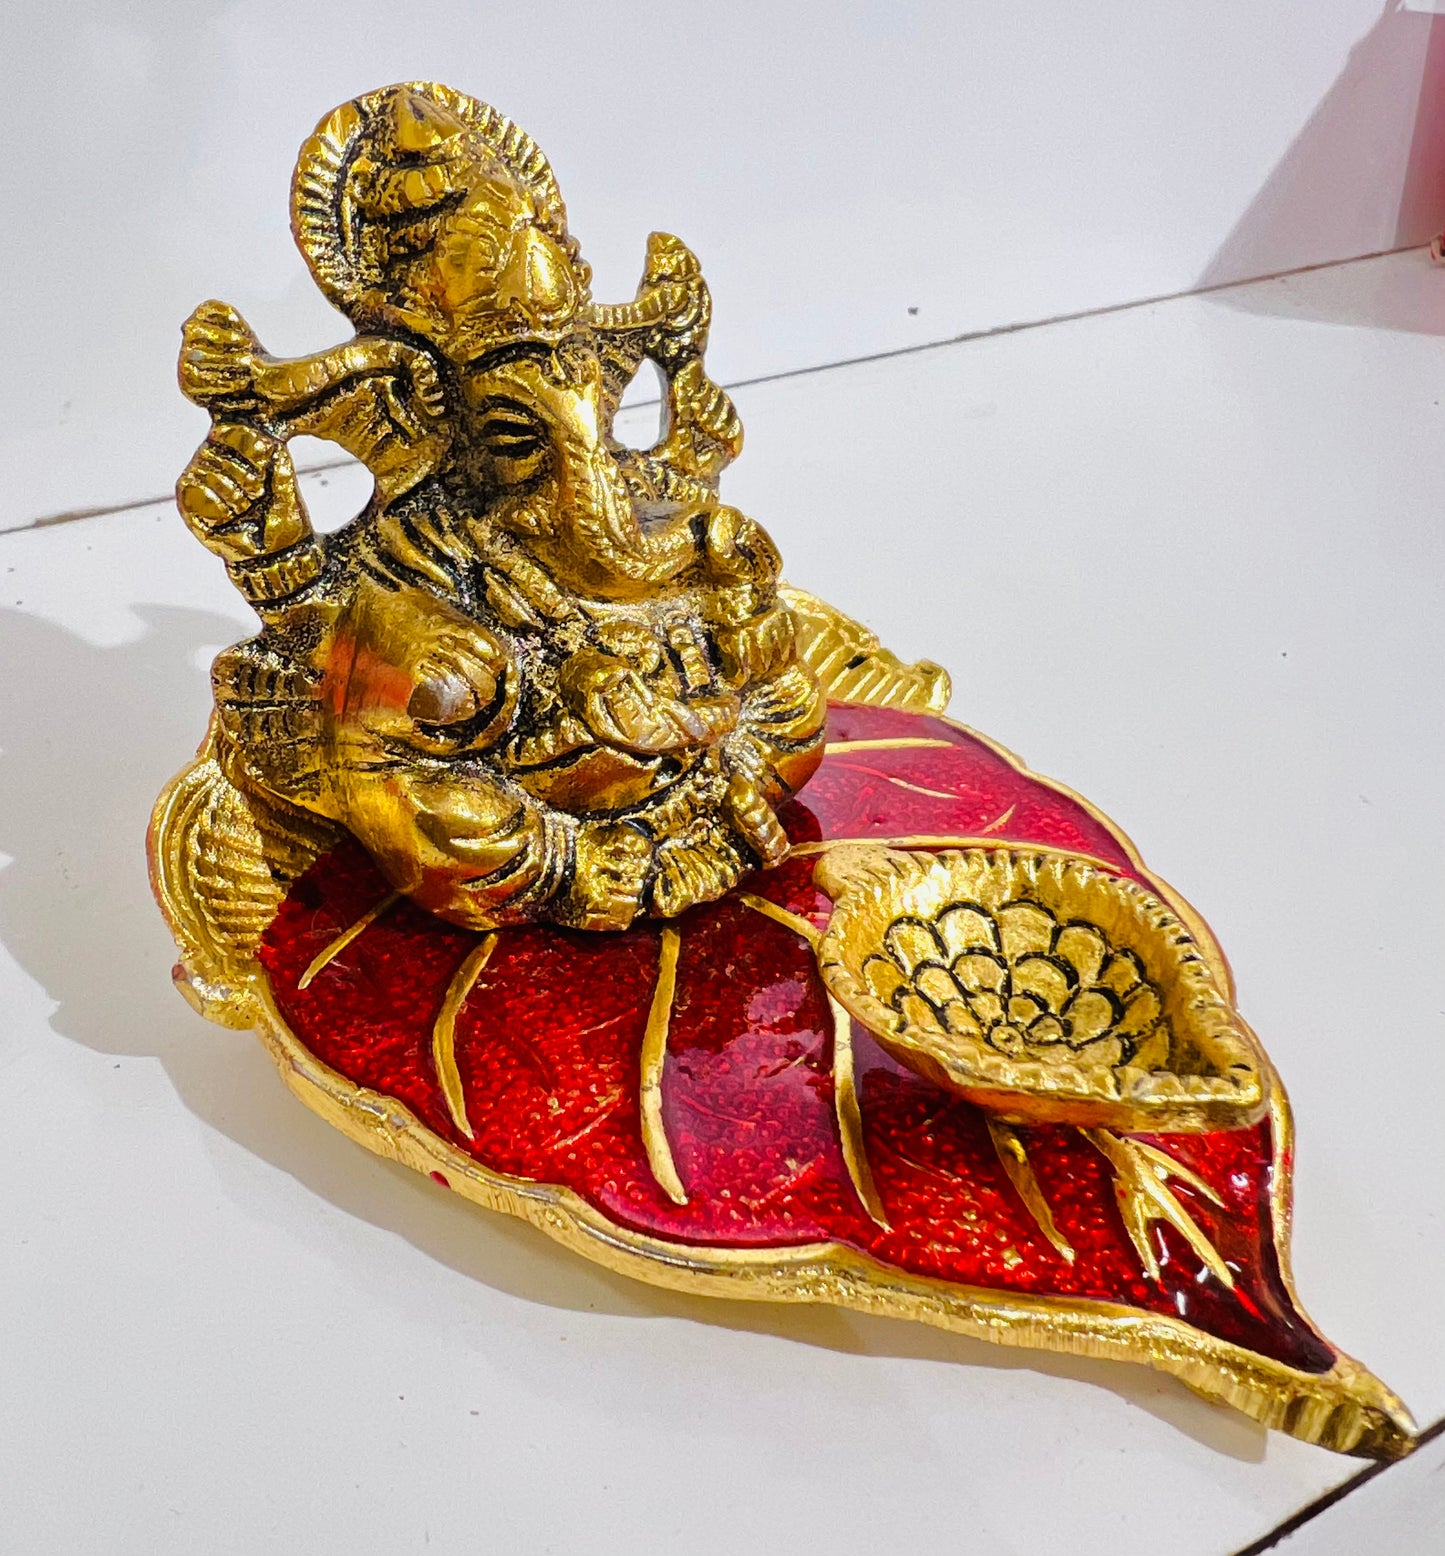 CHANDNI COLLECTION Lord Ganesha on Leaf |Ganesh Metal with Diya| Ganesh Statue for Mandir| Metal Ganesh Statue, Religious Idol, Lord Ganesha Metal Hand Craved for Home Decorative Gift (RED & GREEN Leaf, Pack of 1)